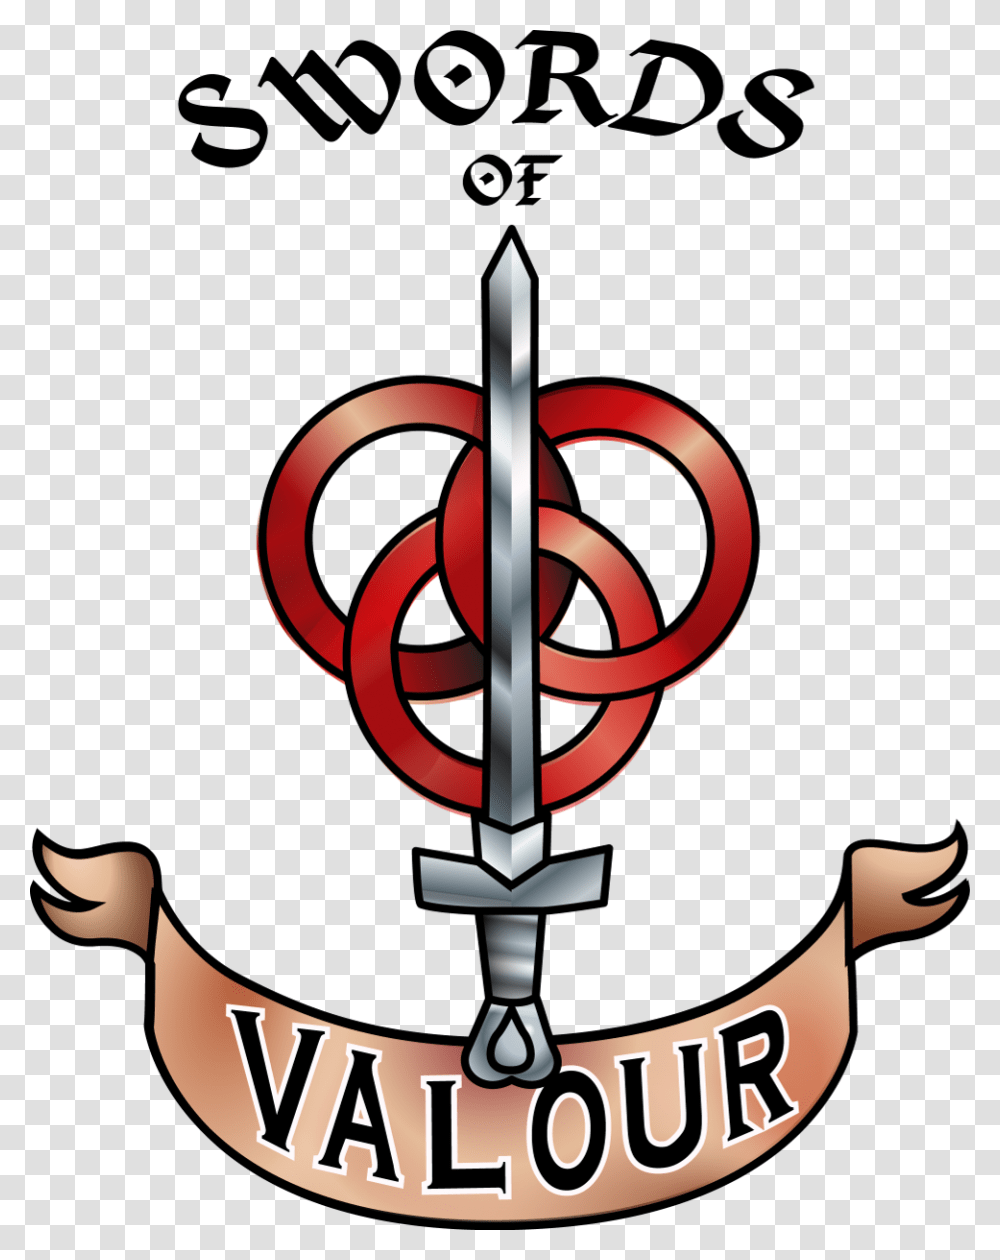 Swords Of Valour Valour, Weapon, Weaponry, Emblem Transparent Png